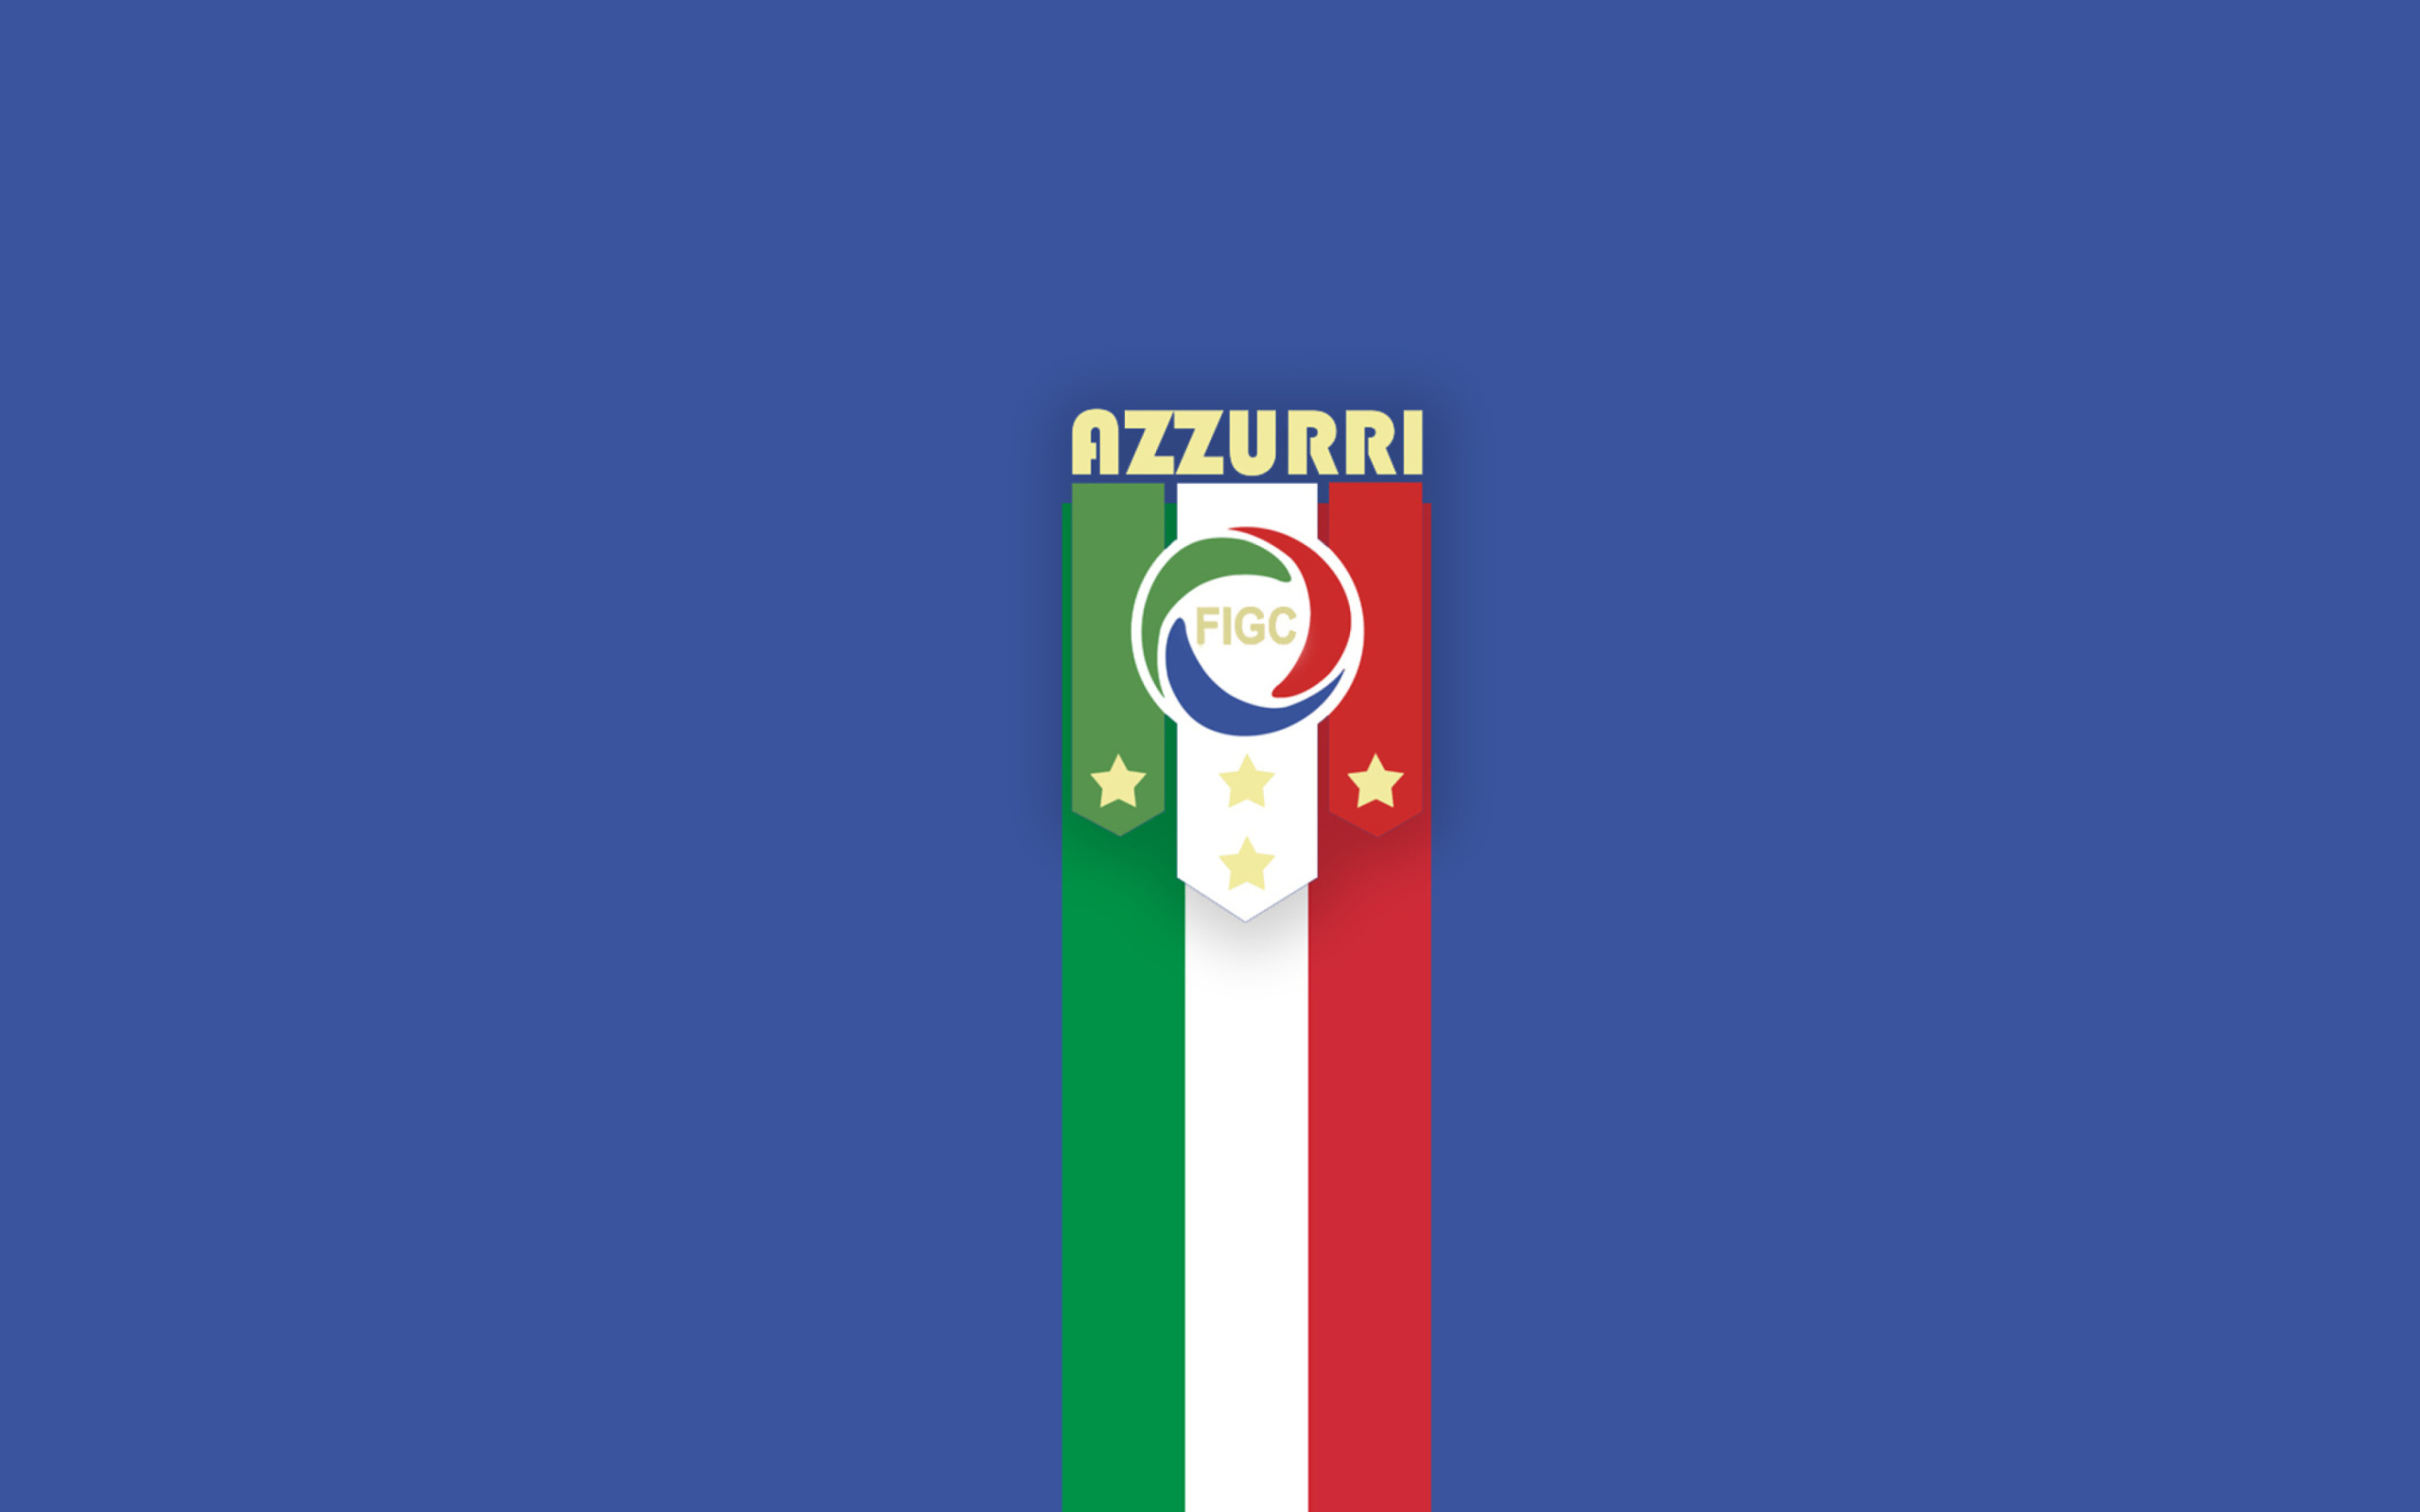 Azzurri - Italy National Team wallpaper 2560x1600